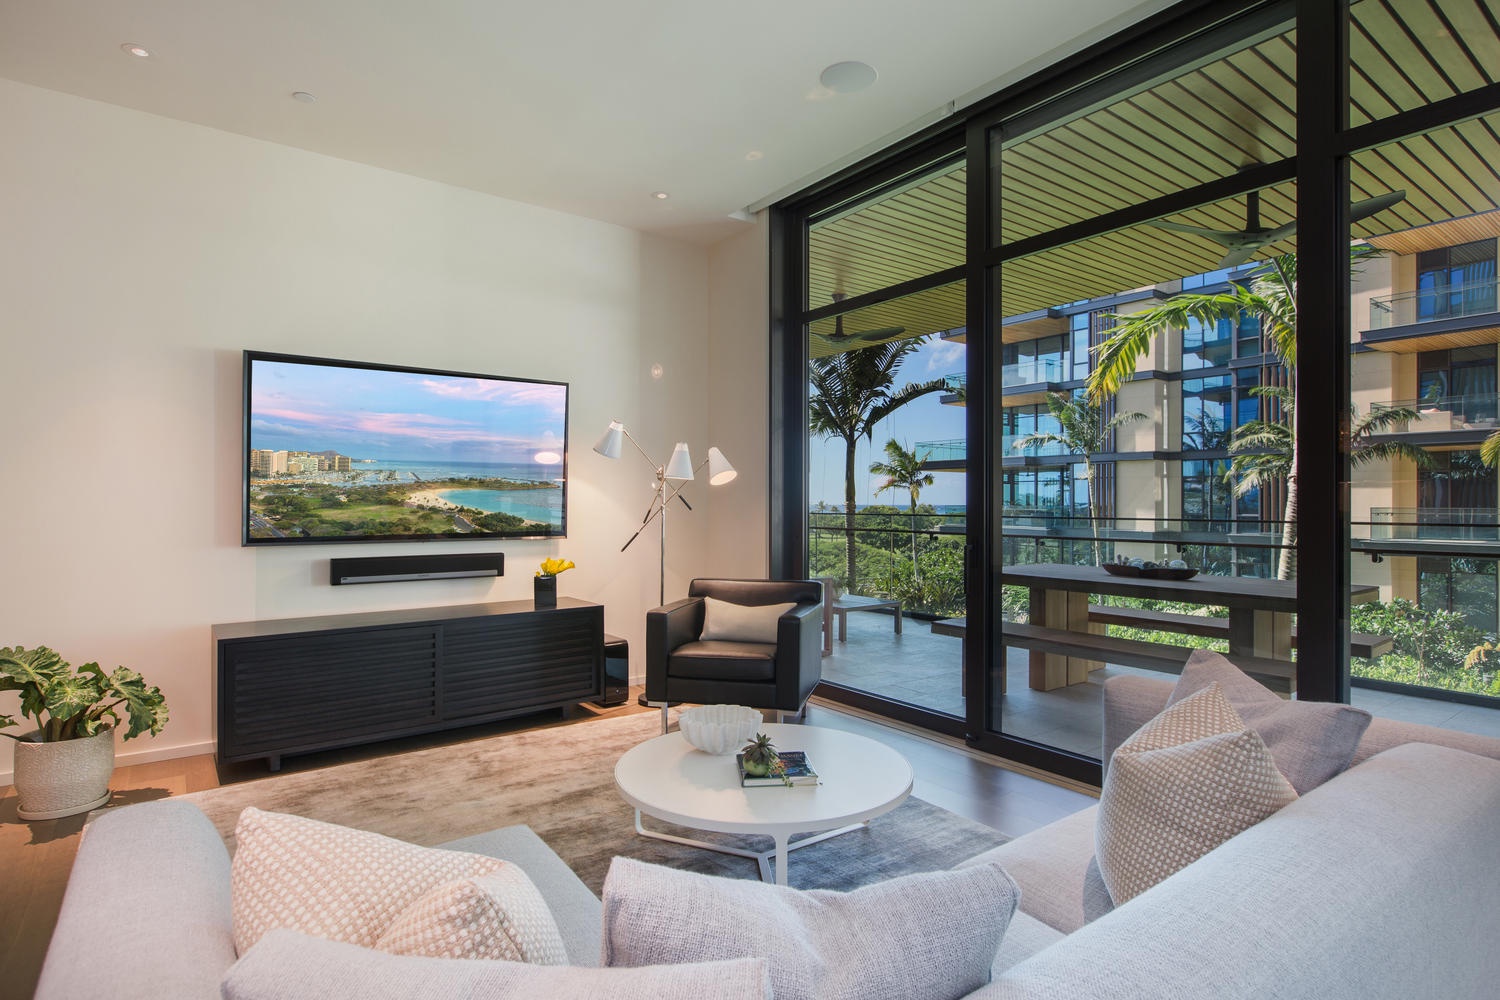 Honolulu Vacation Rentals, Park Lane Palm Resort - Living Room Views